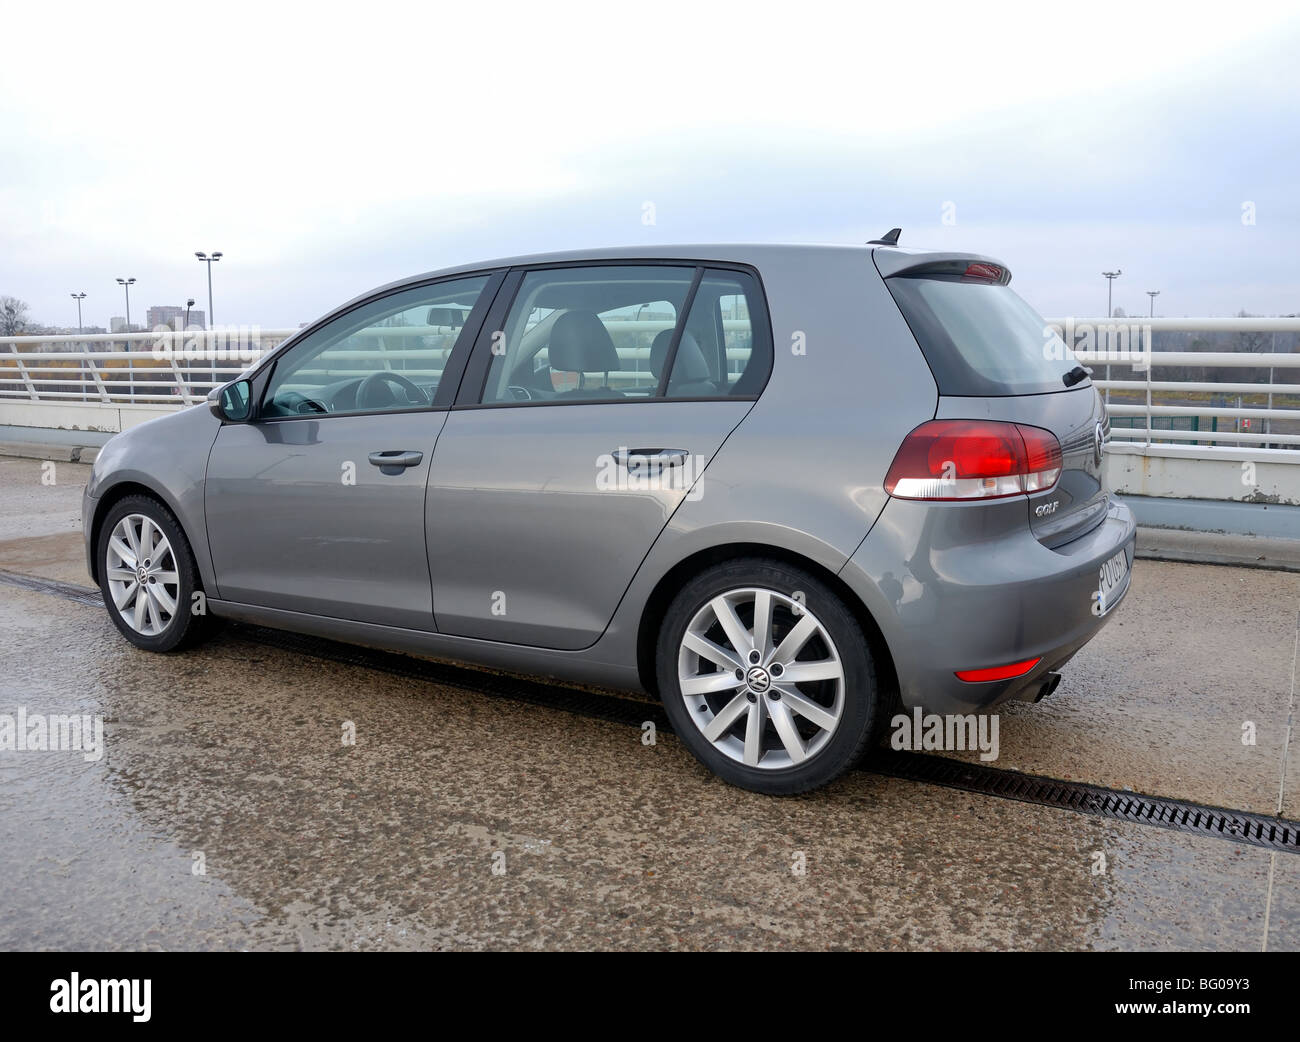 Volkswagen Golf VI 1.4 TSI DSG - 2009 - grey - five doors (5D) - compact car - parking space, exterior Stock Alamy